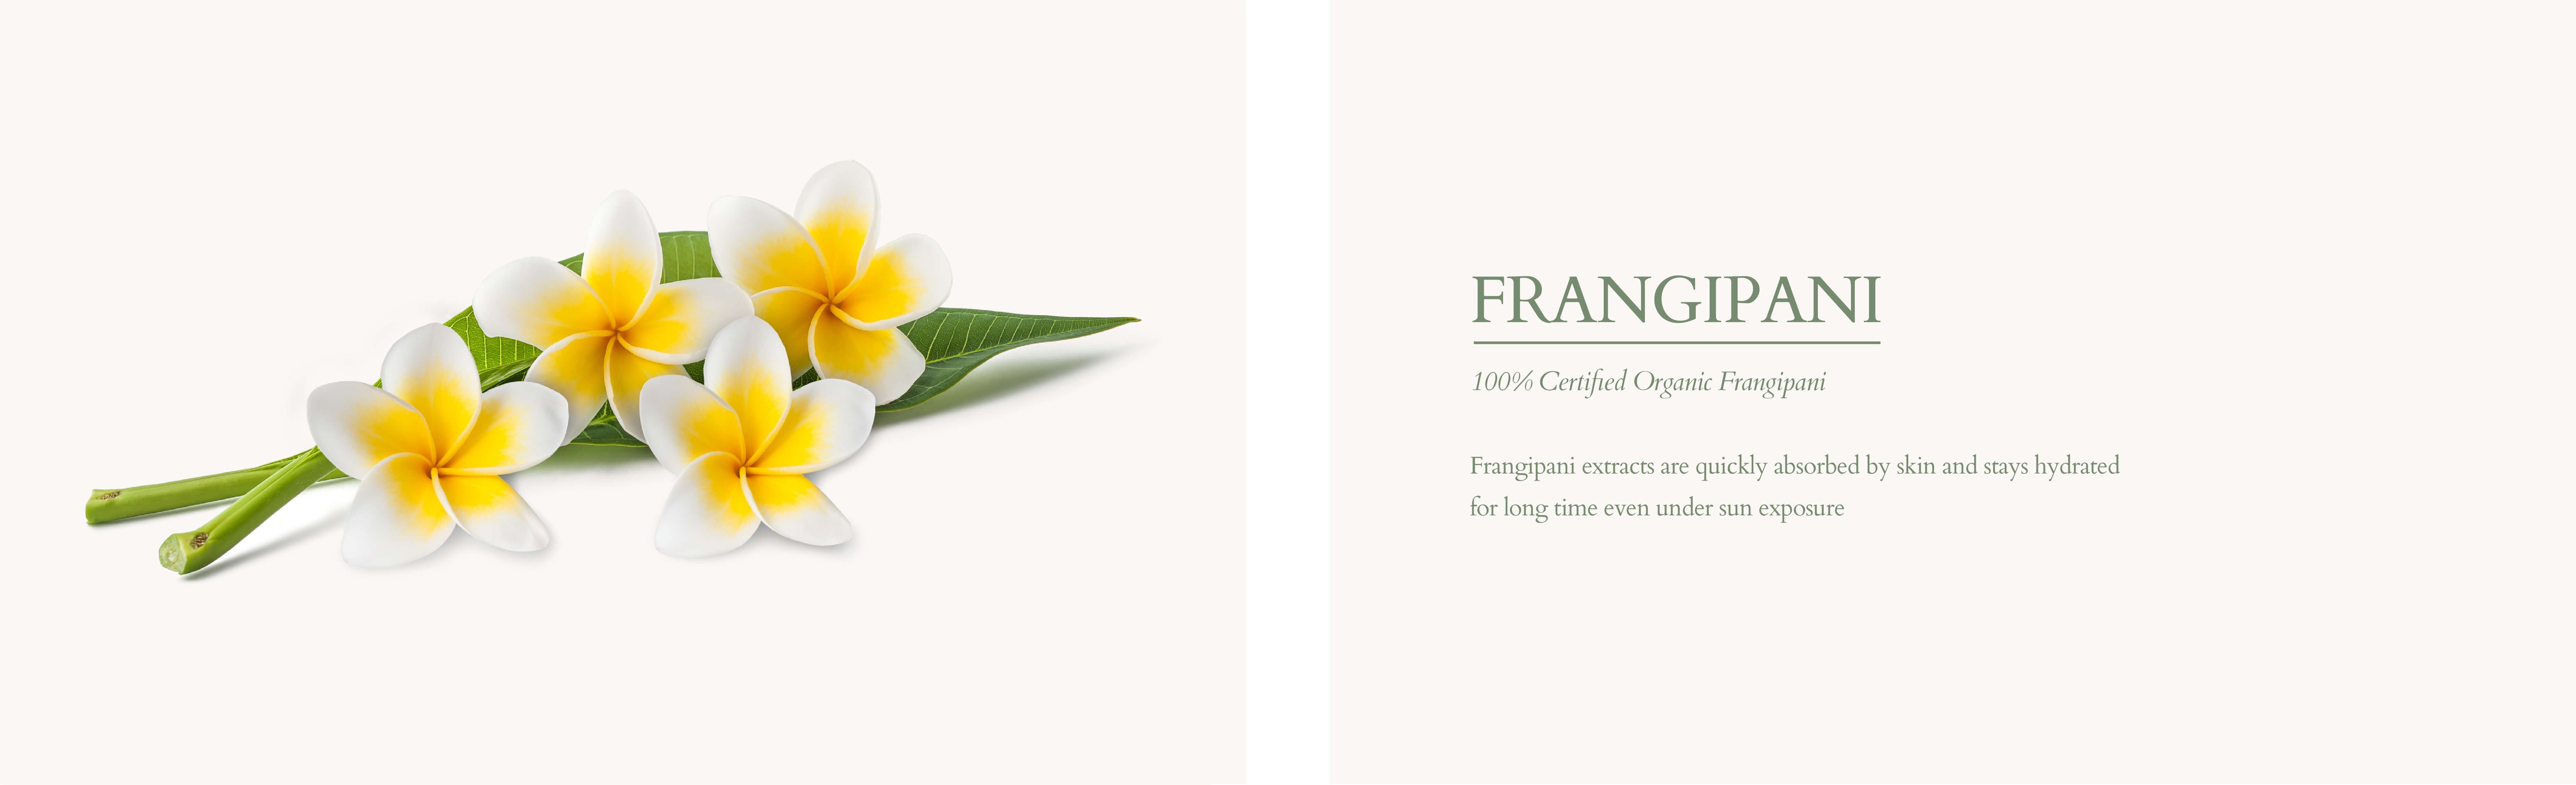 Organic frangipani for skin